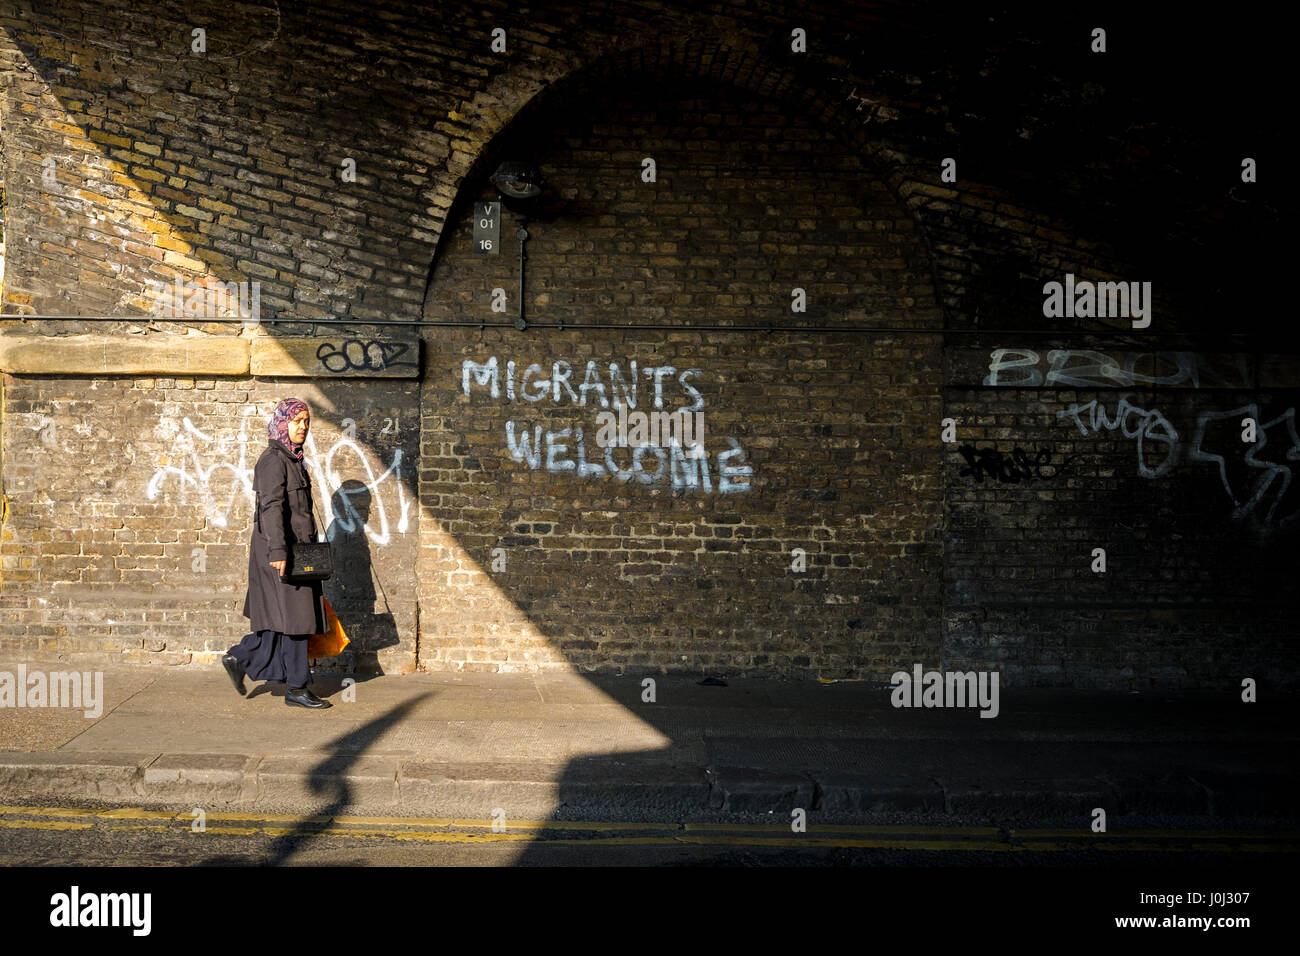 Asian woman walks past graffiti in London's Bethnal Green welcoming migrants. Stock Photo